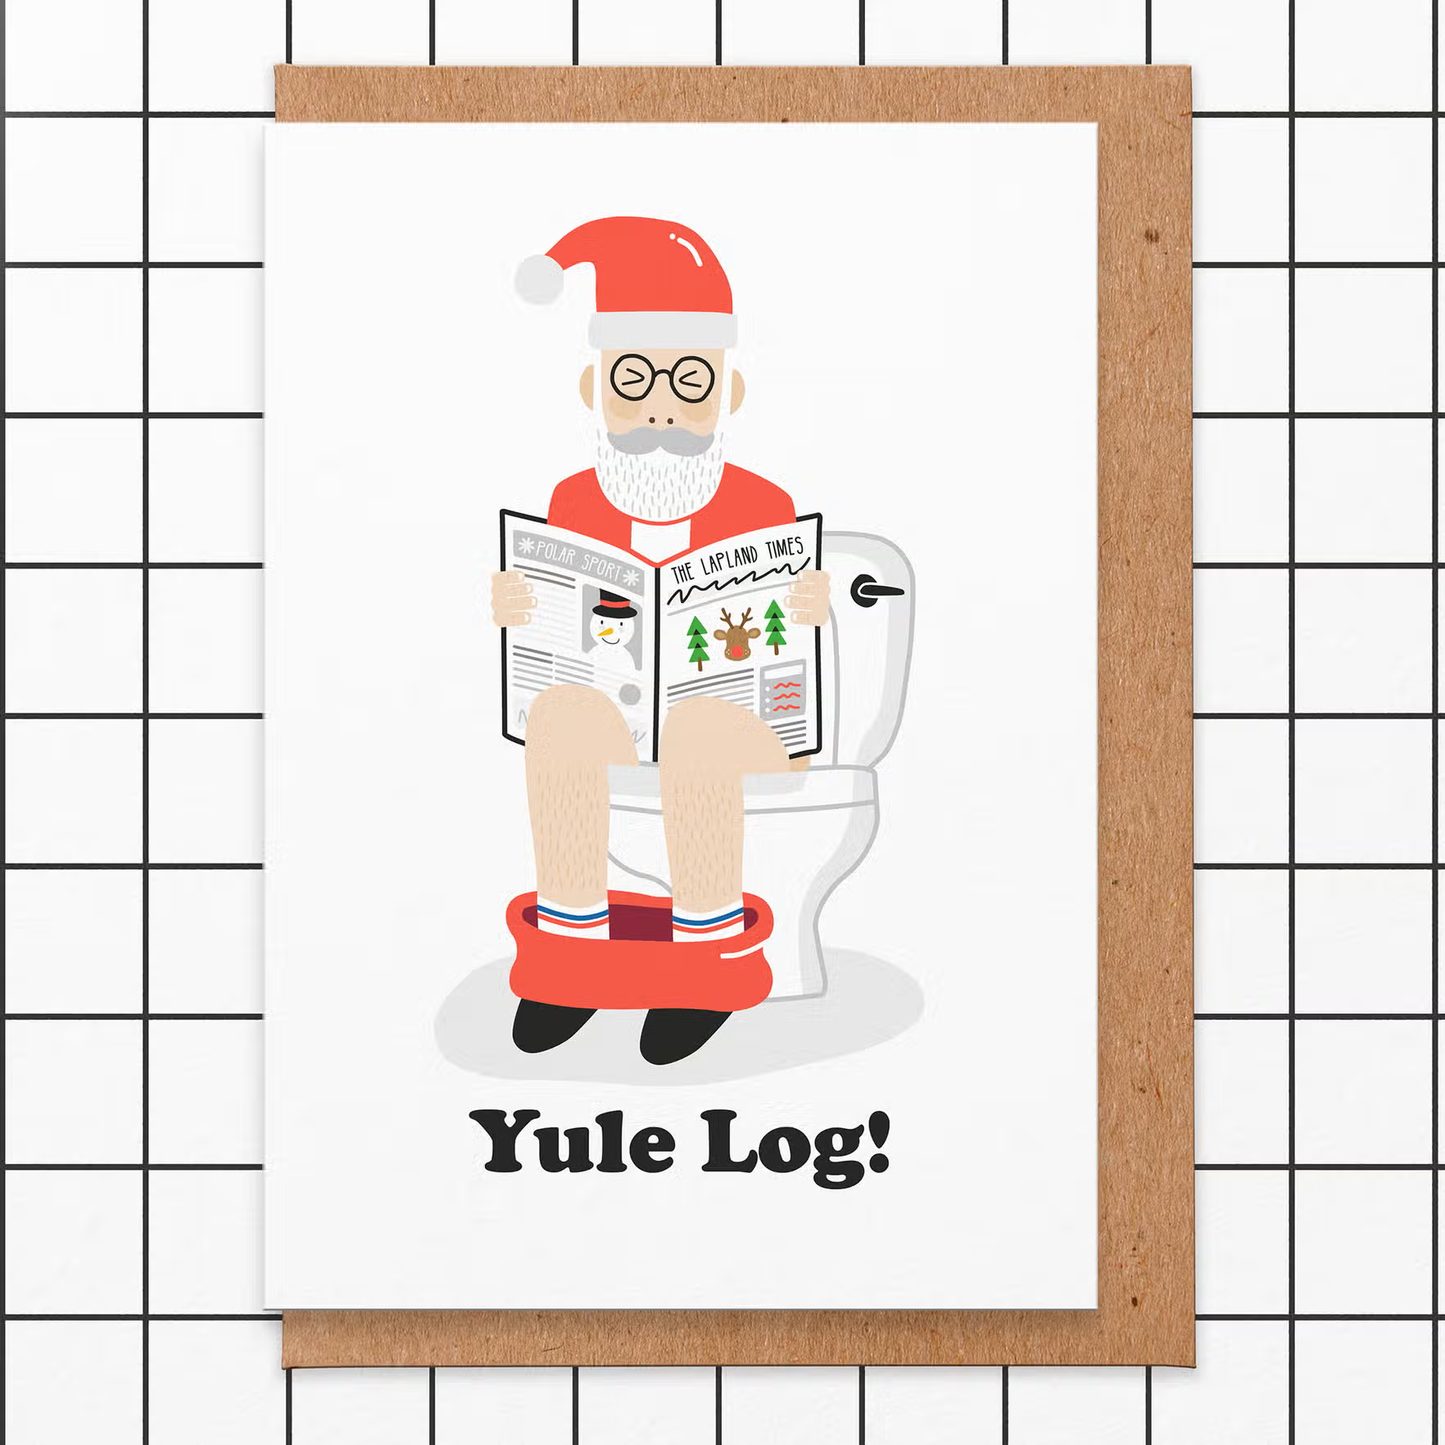 Yule Log Greeting Card